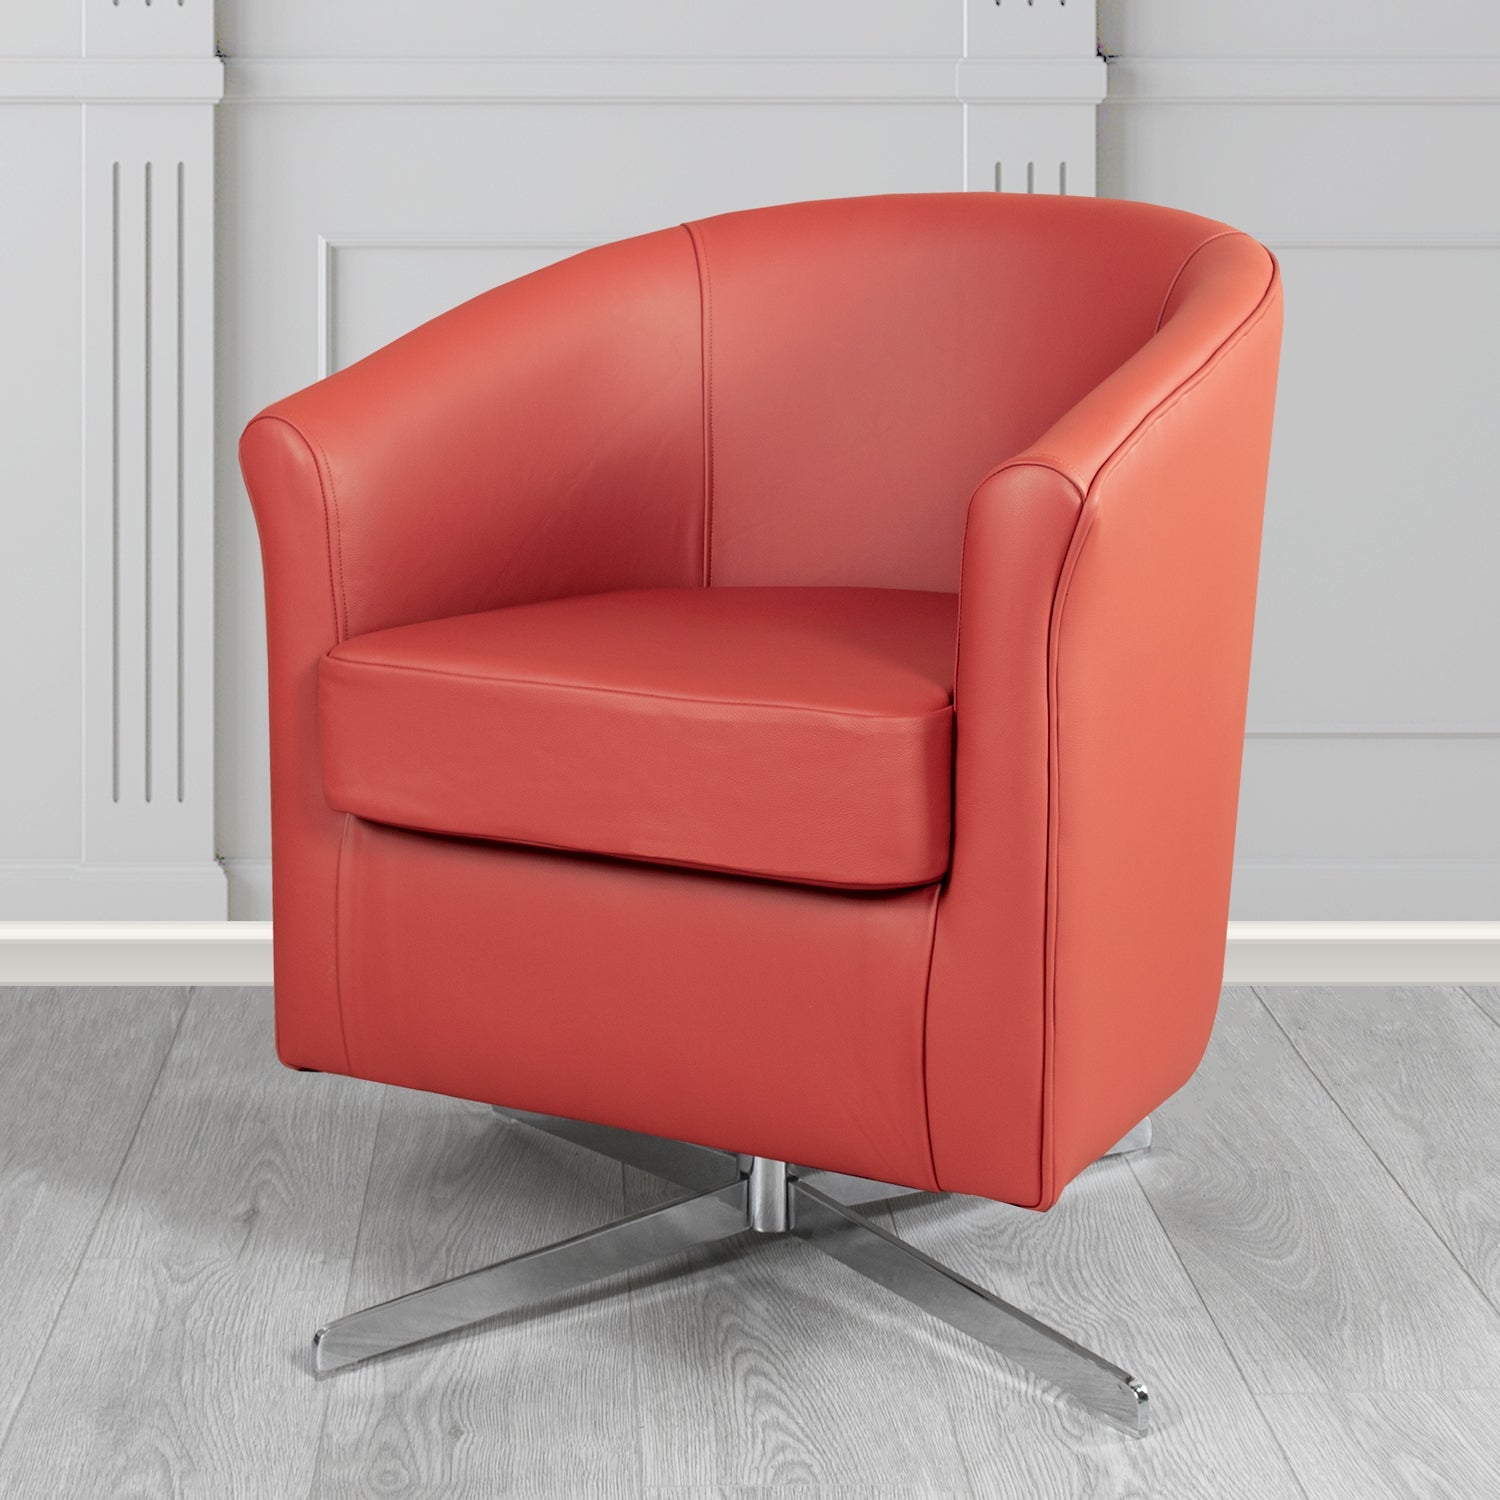 Cannes Swivel Tub Chair in Shelly Crimson Crib 5 Genuine Leather - The Tub Chair Shop